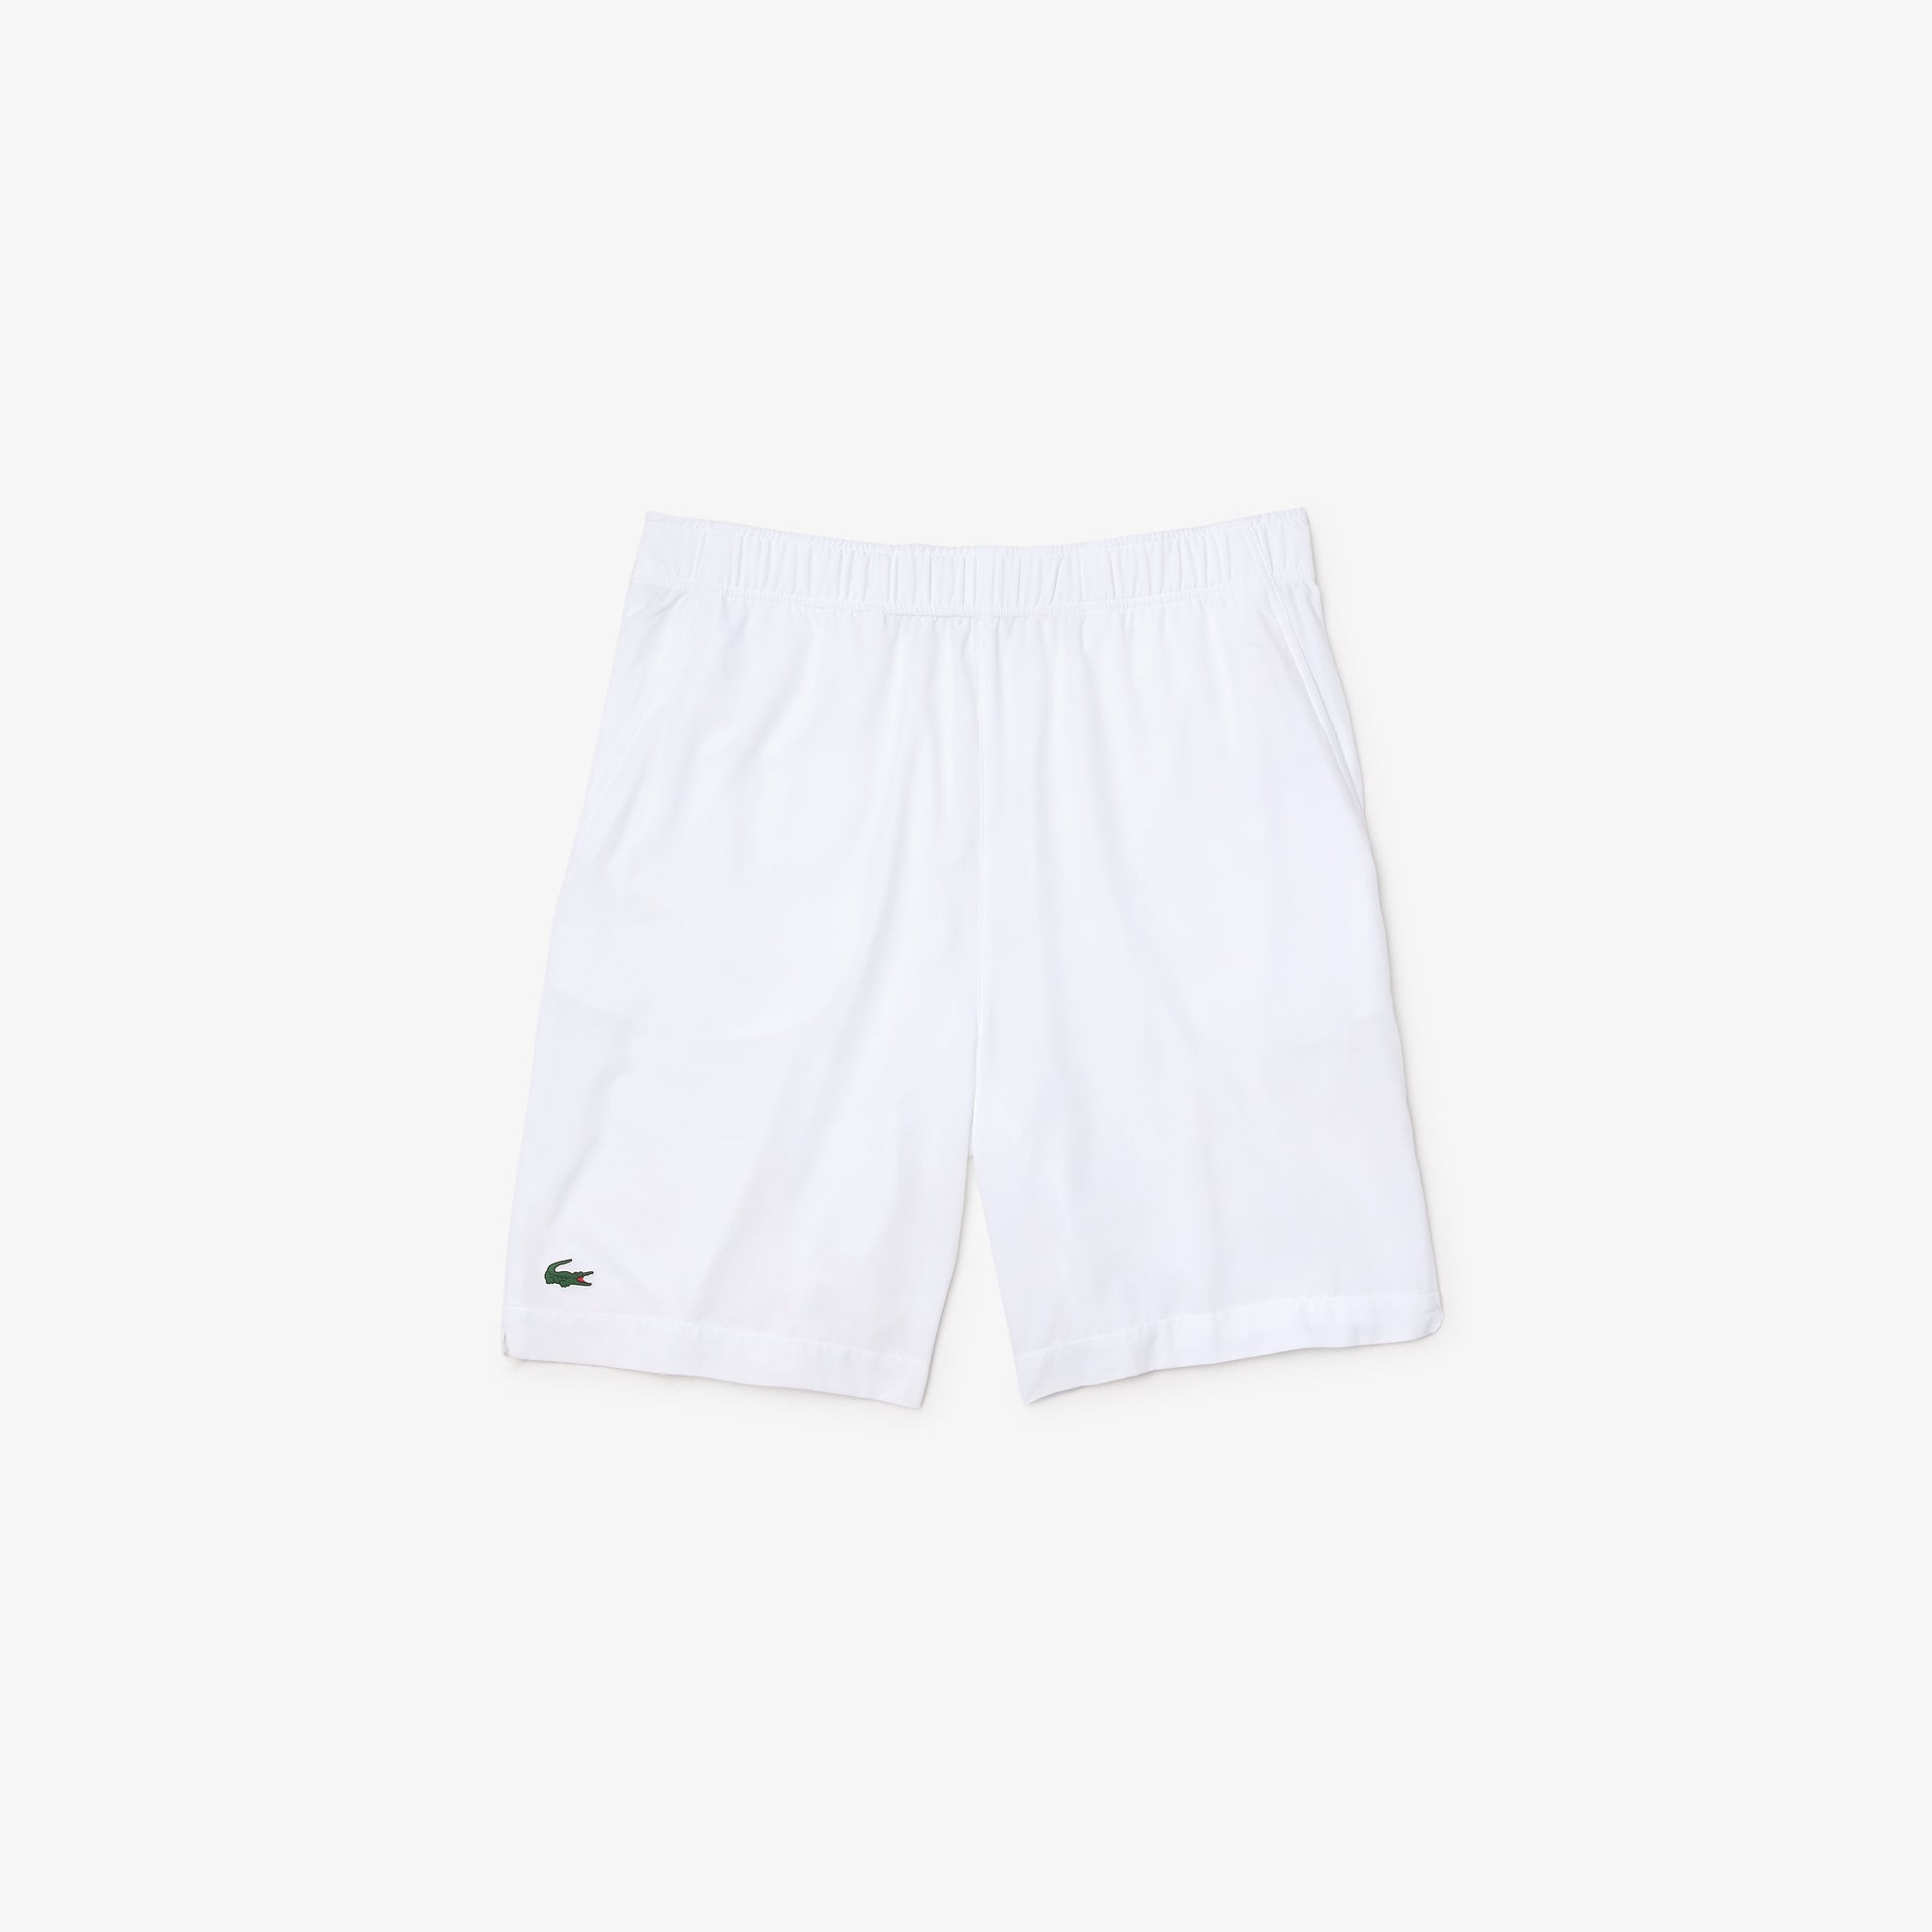 Lacoste Shorts (Blanc/Navy) - L